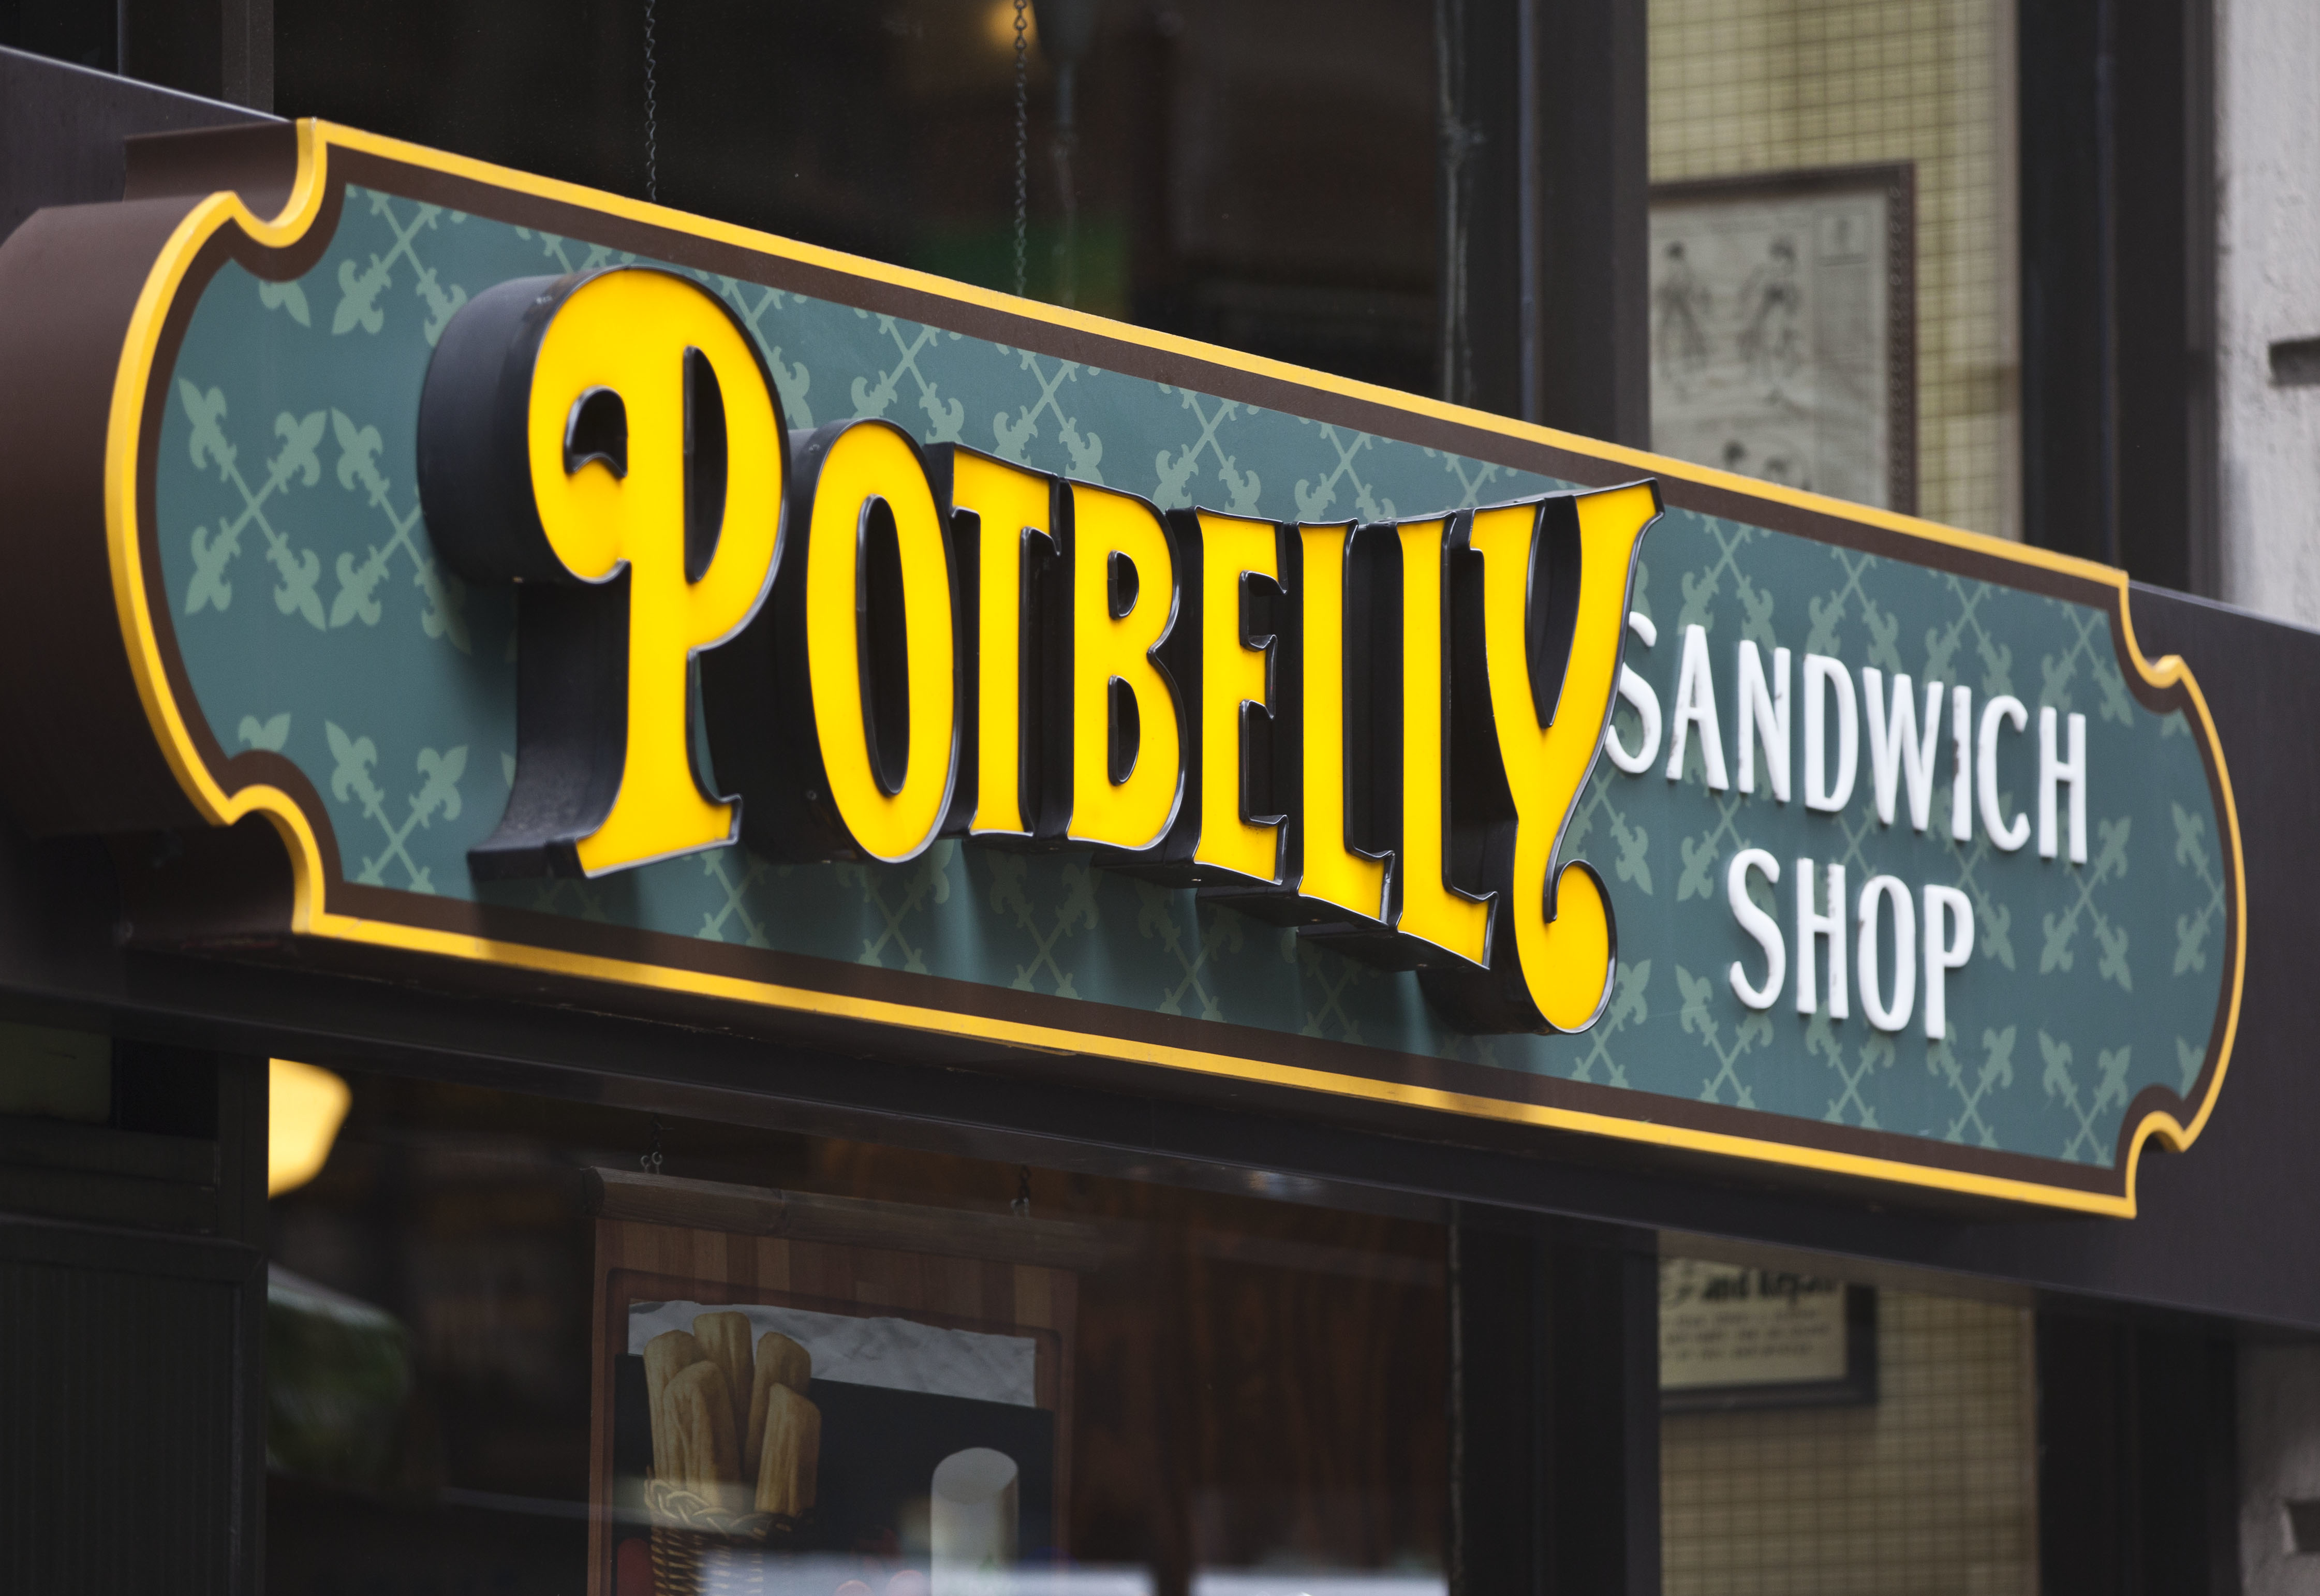 New York - Potbelly Sandwich Shop IPO